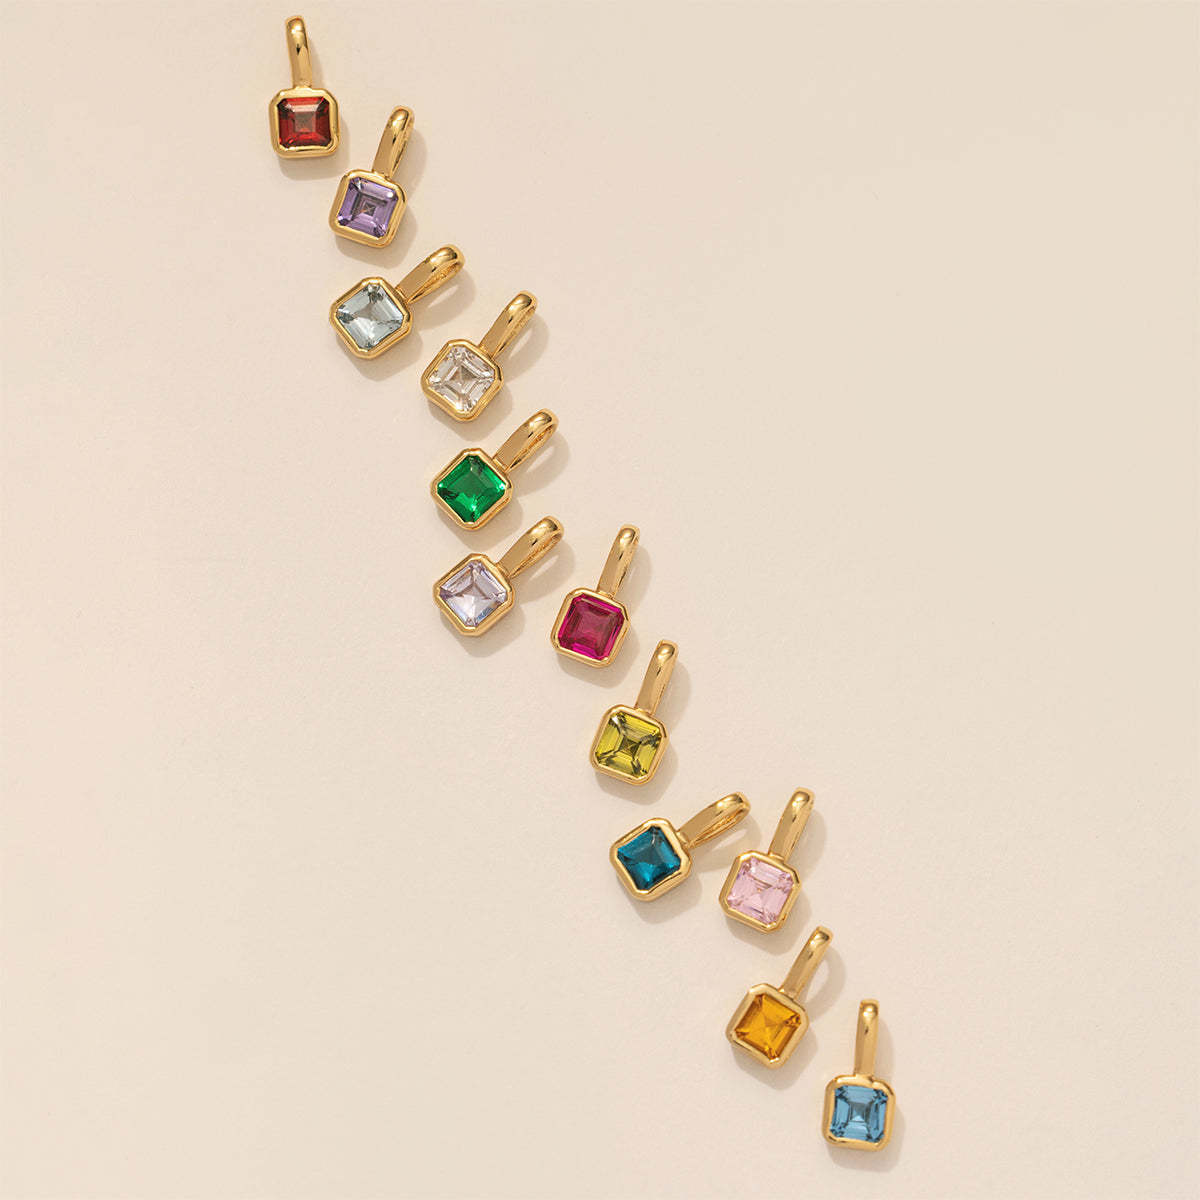 Colorful birthstone pendant jewelry DIY accessories